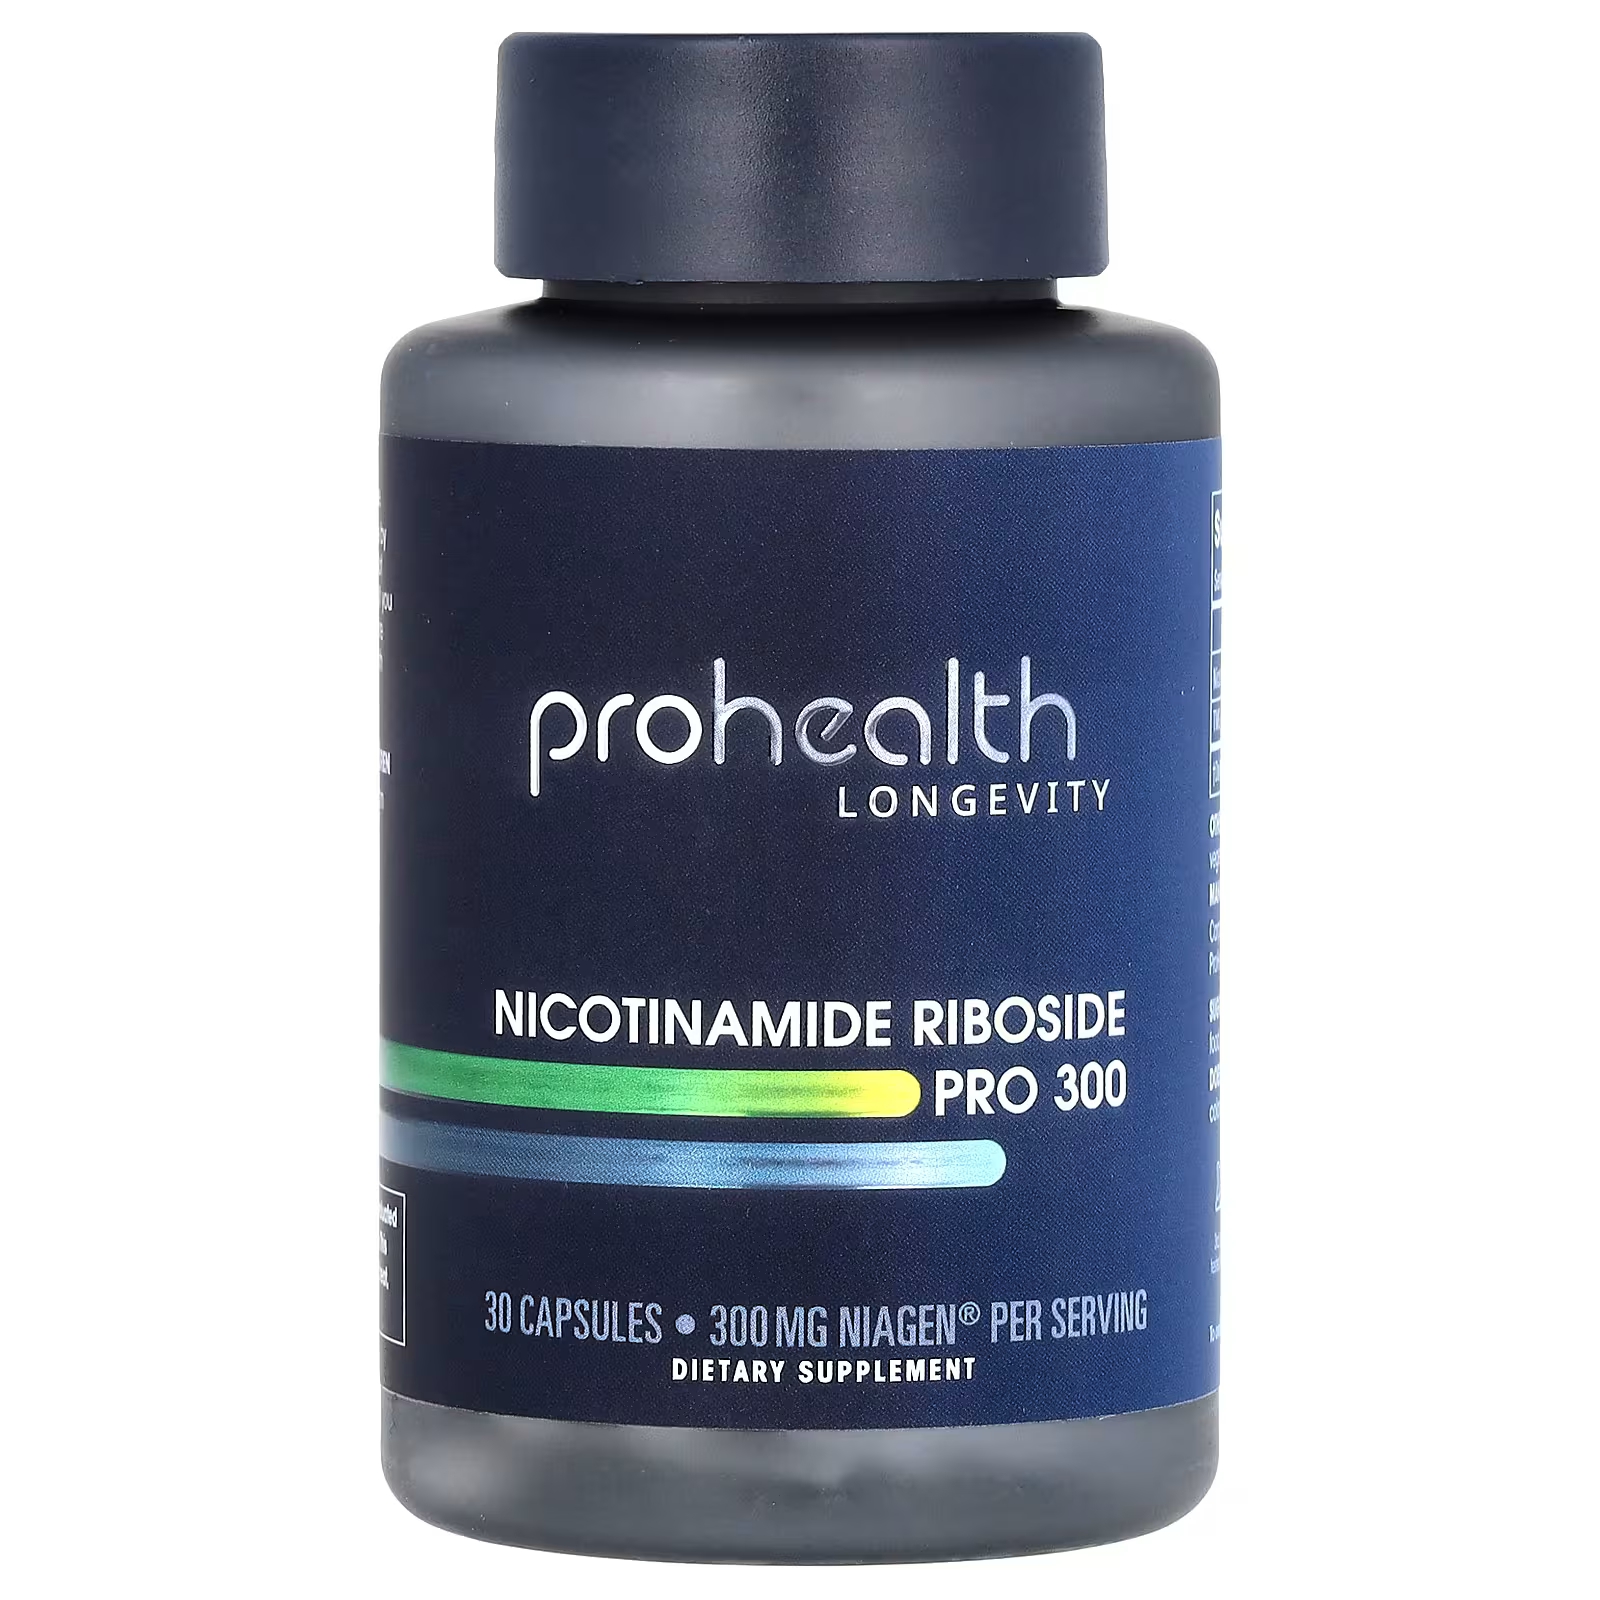 Пищевая добавка ProHealth Longevity Никотинамид рибозид Pro 300, 300 мг prohealth longevity никотинамид рибозид pro 300 300 мг 30 капсул